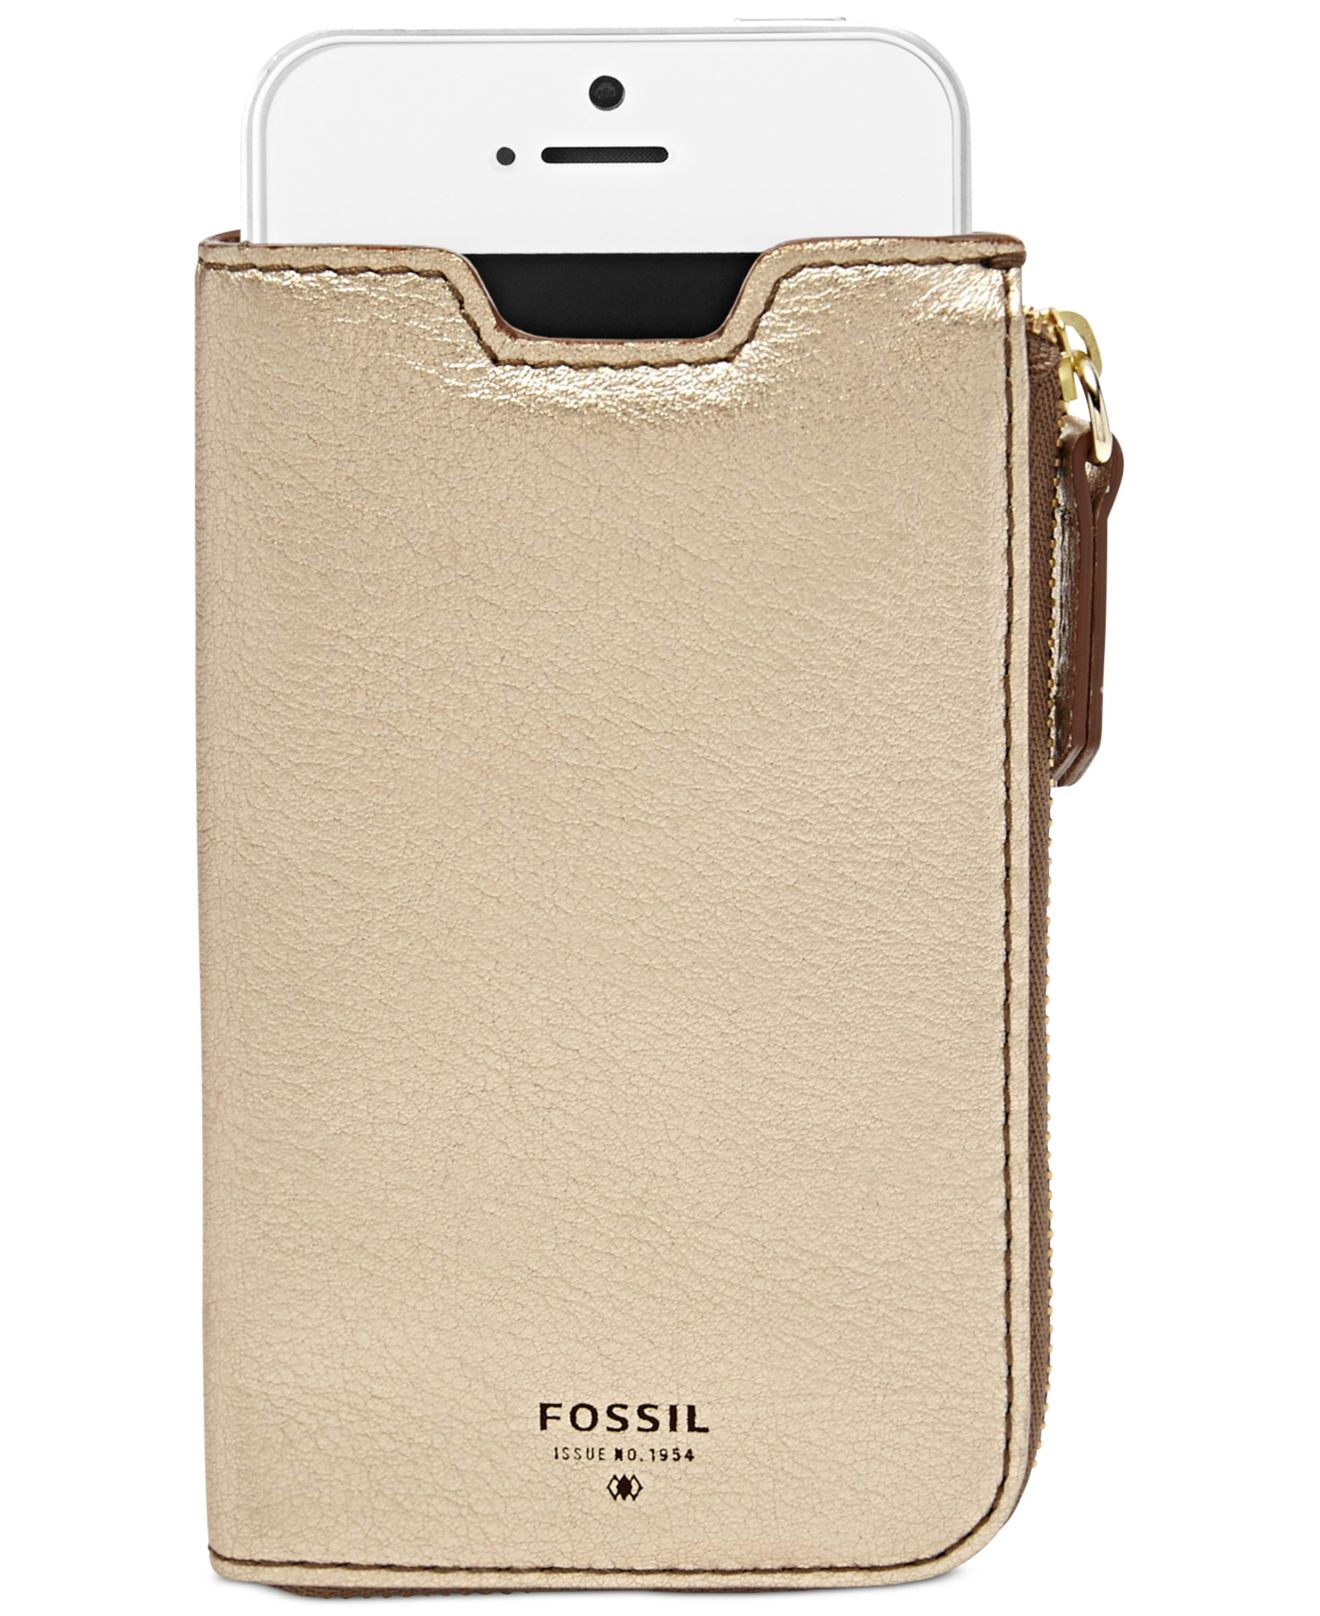 Fossil Sydney Leather Phone Sleeve Wallet in Metallic Gold (Metallic) - Lyst